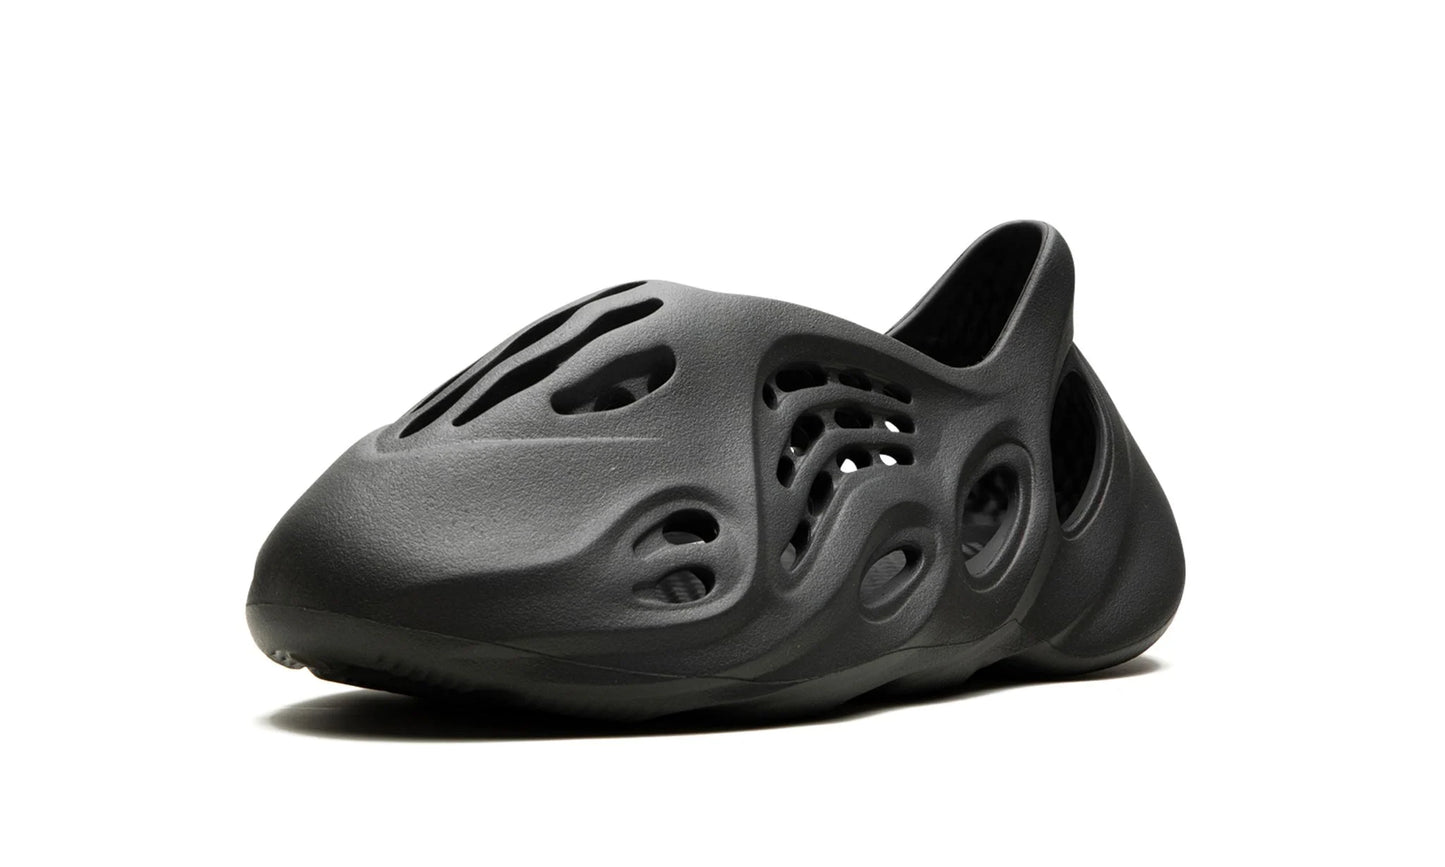 Tênis Adidas Yeezy Foam Runner "Carbon"